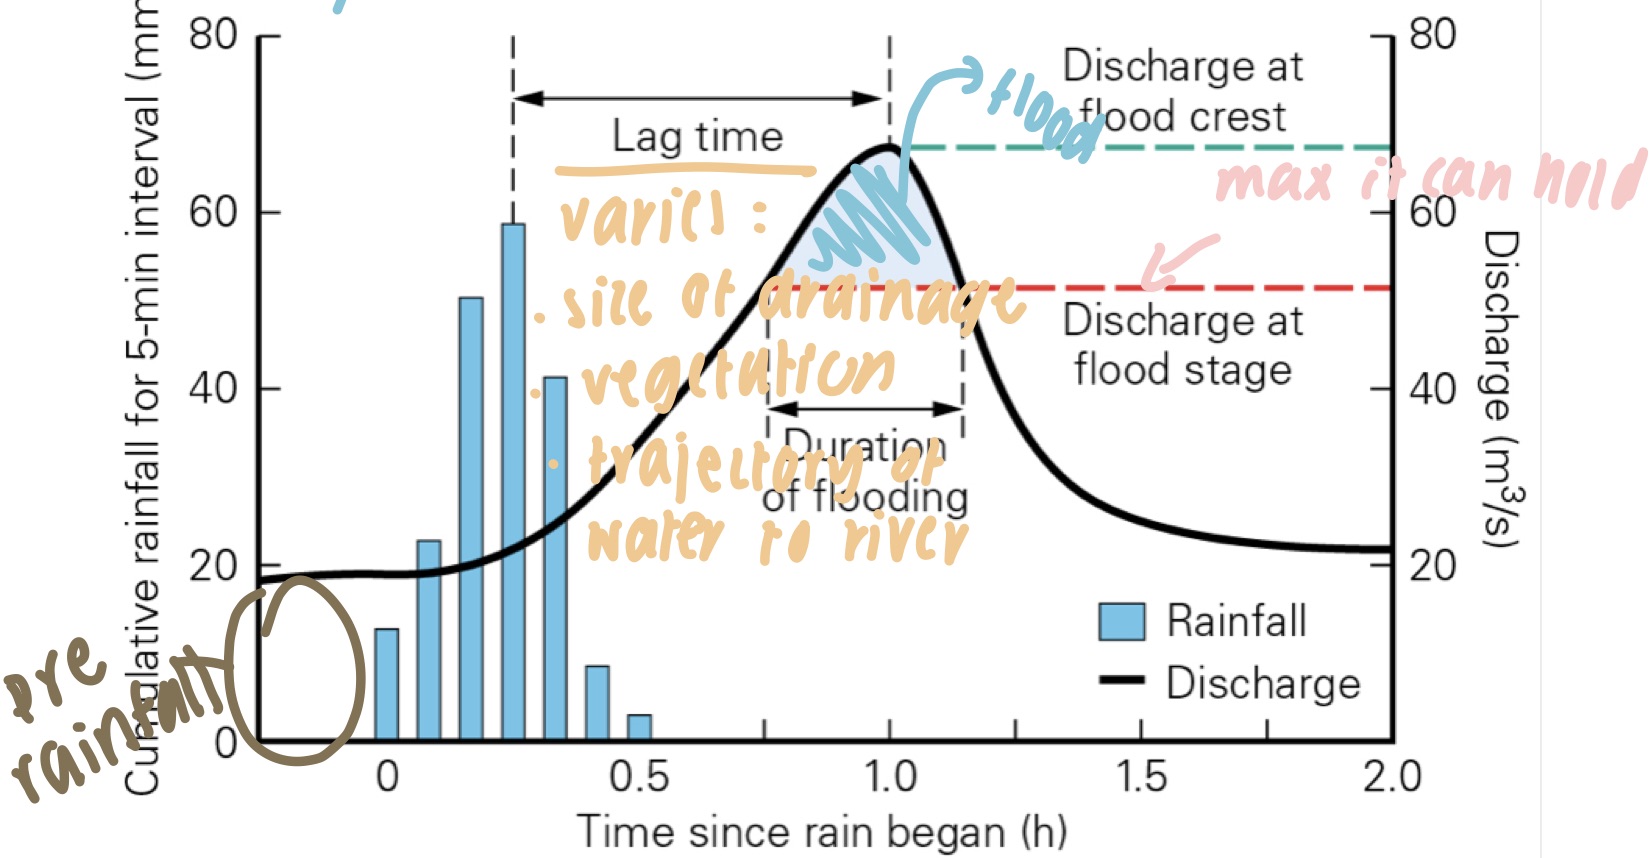 <ul><li><p>length of lag time depends on:</p><ul><li><p>basin area and shape</p></li><li><p>spacing of drainage channels</p></li><li><p>vegetation cover</p></li><li><p>soil permeability and land use</p></li></ul></li><li><p>time delay cuz water has to make way to river</p></li></ul>